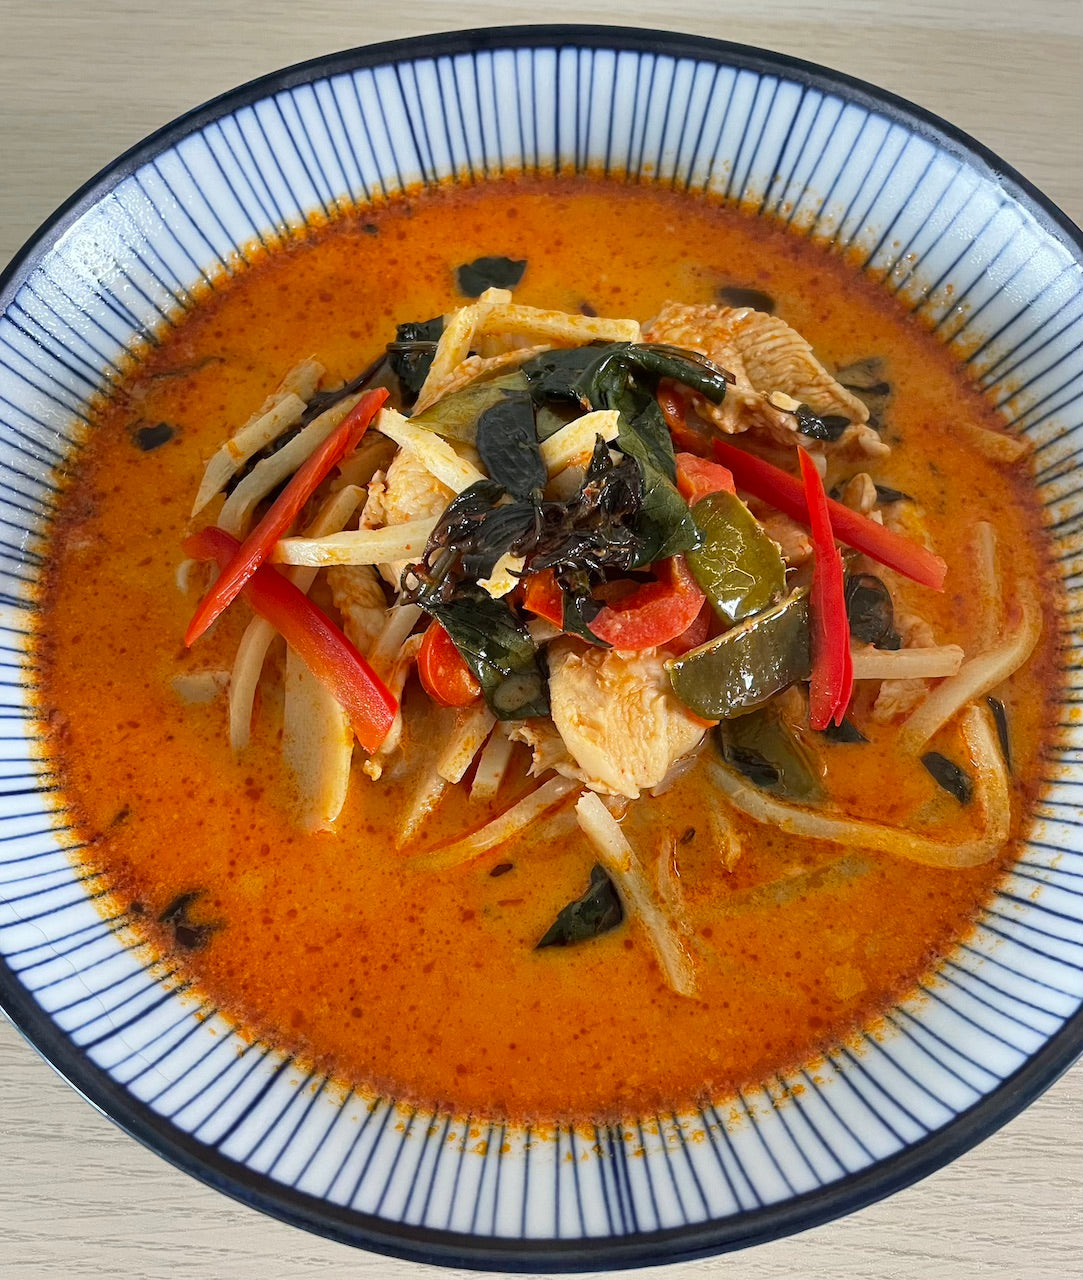 Gaeng daeng - Red curry